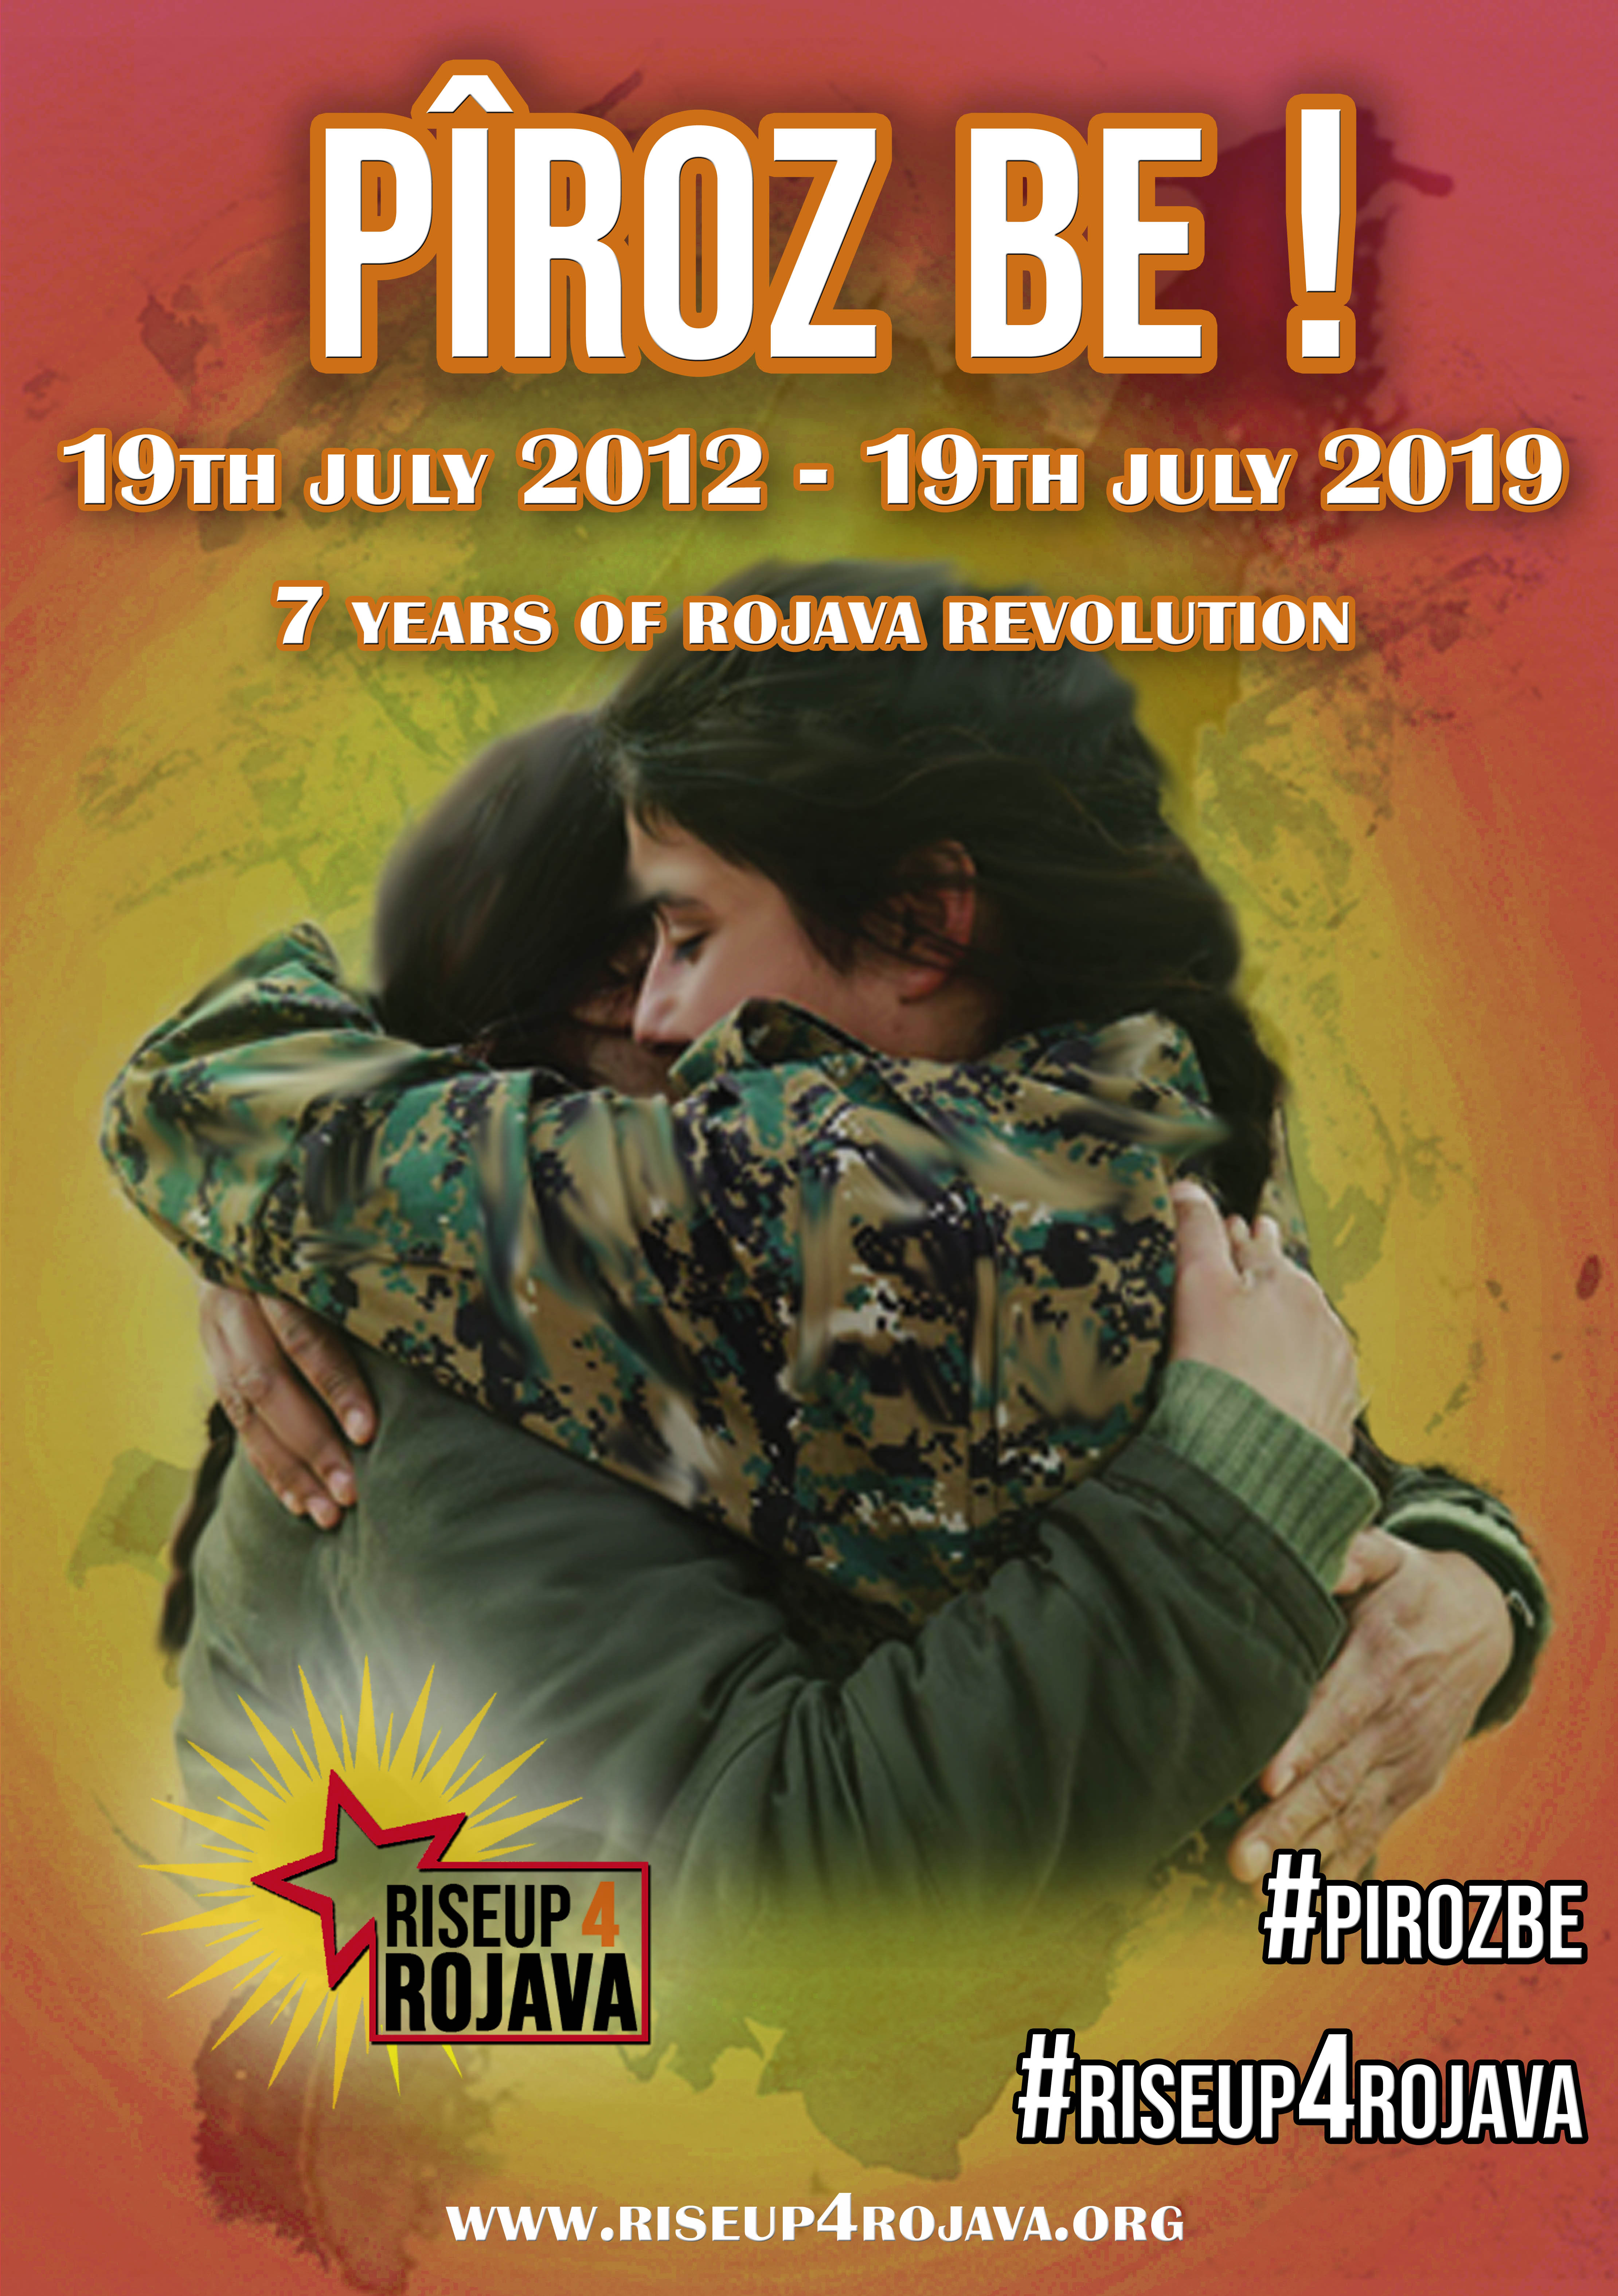 July 19th: #pirozbe – Congratulations to the Revolution